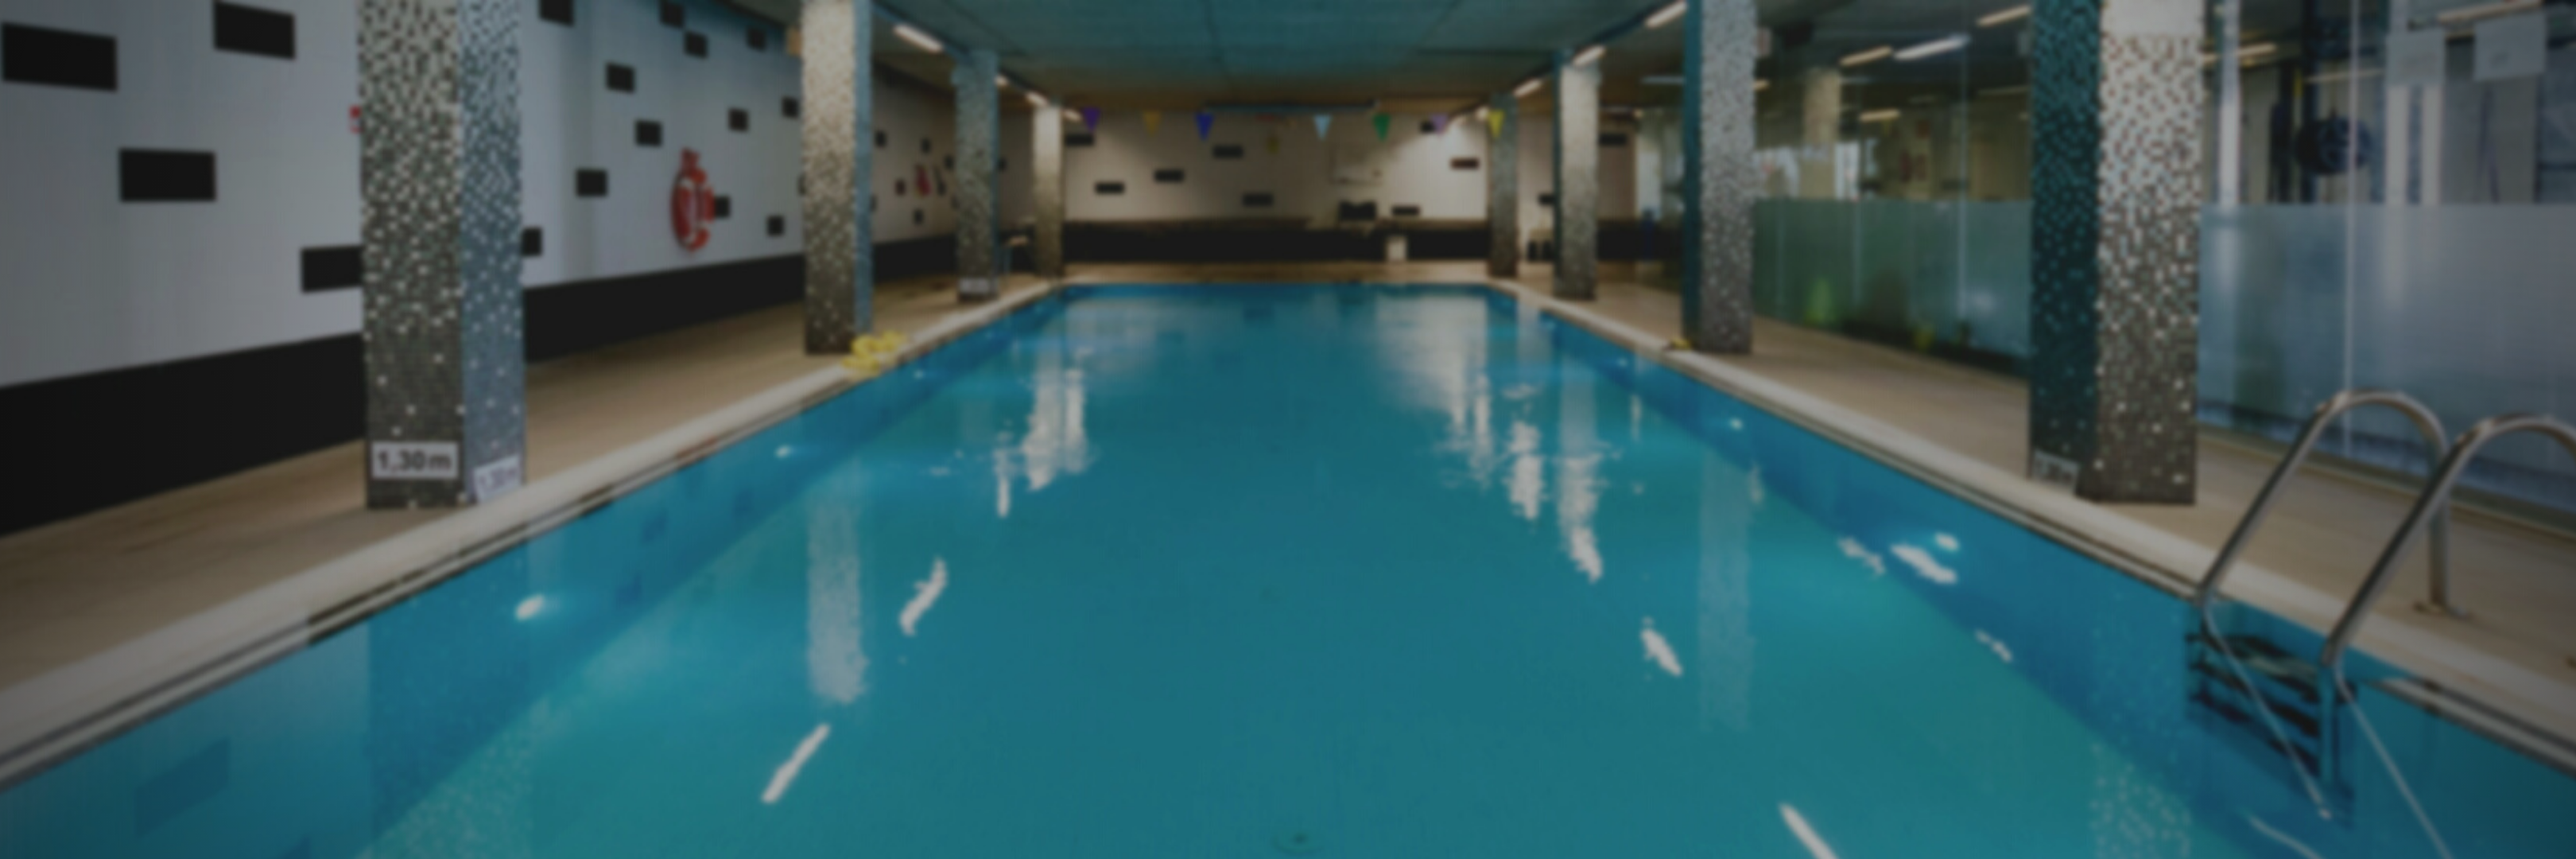 imagen piscina interior